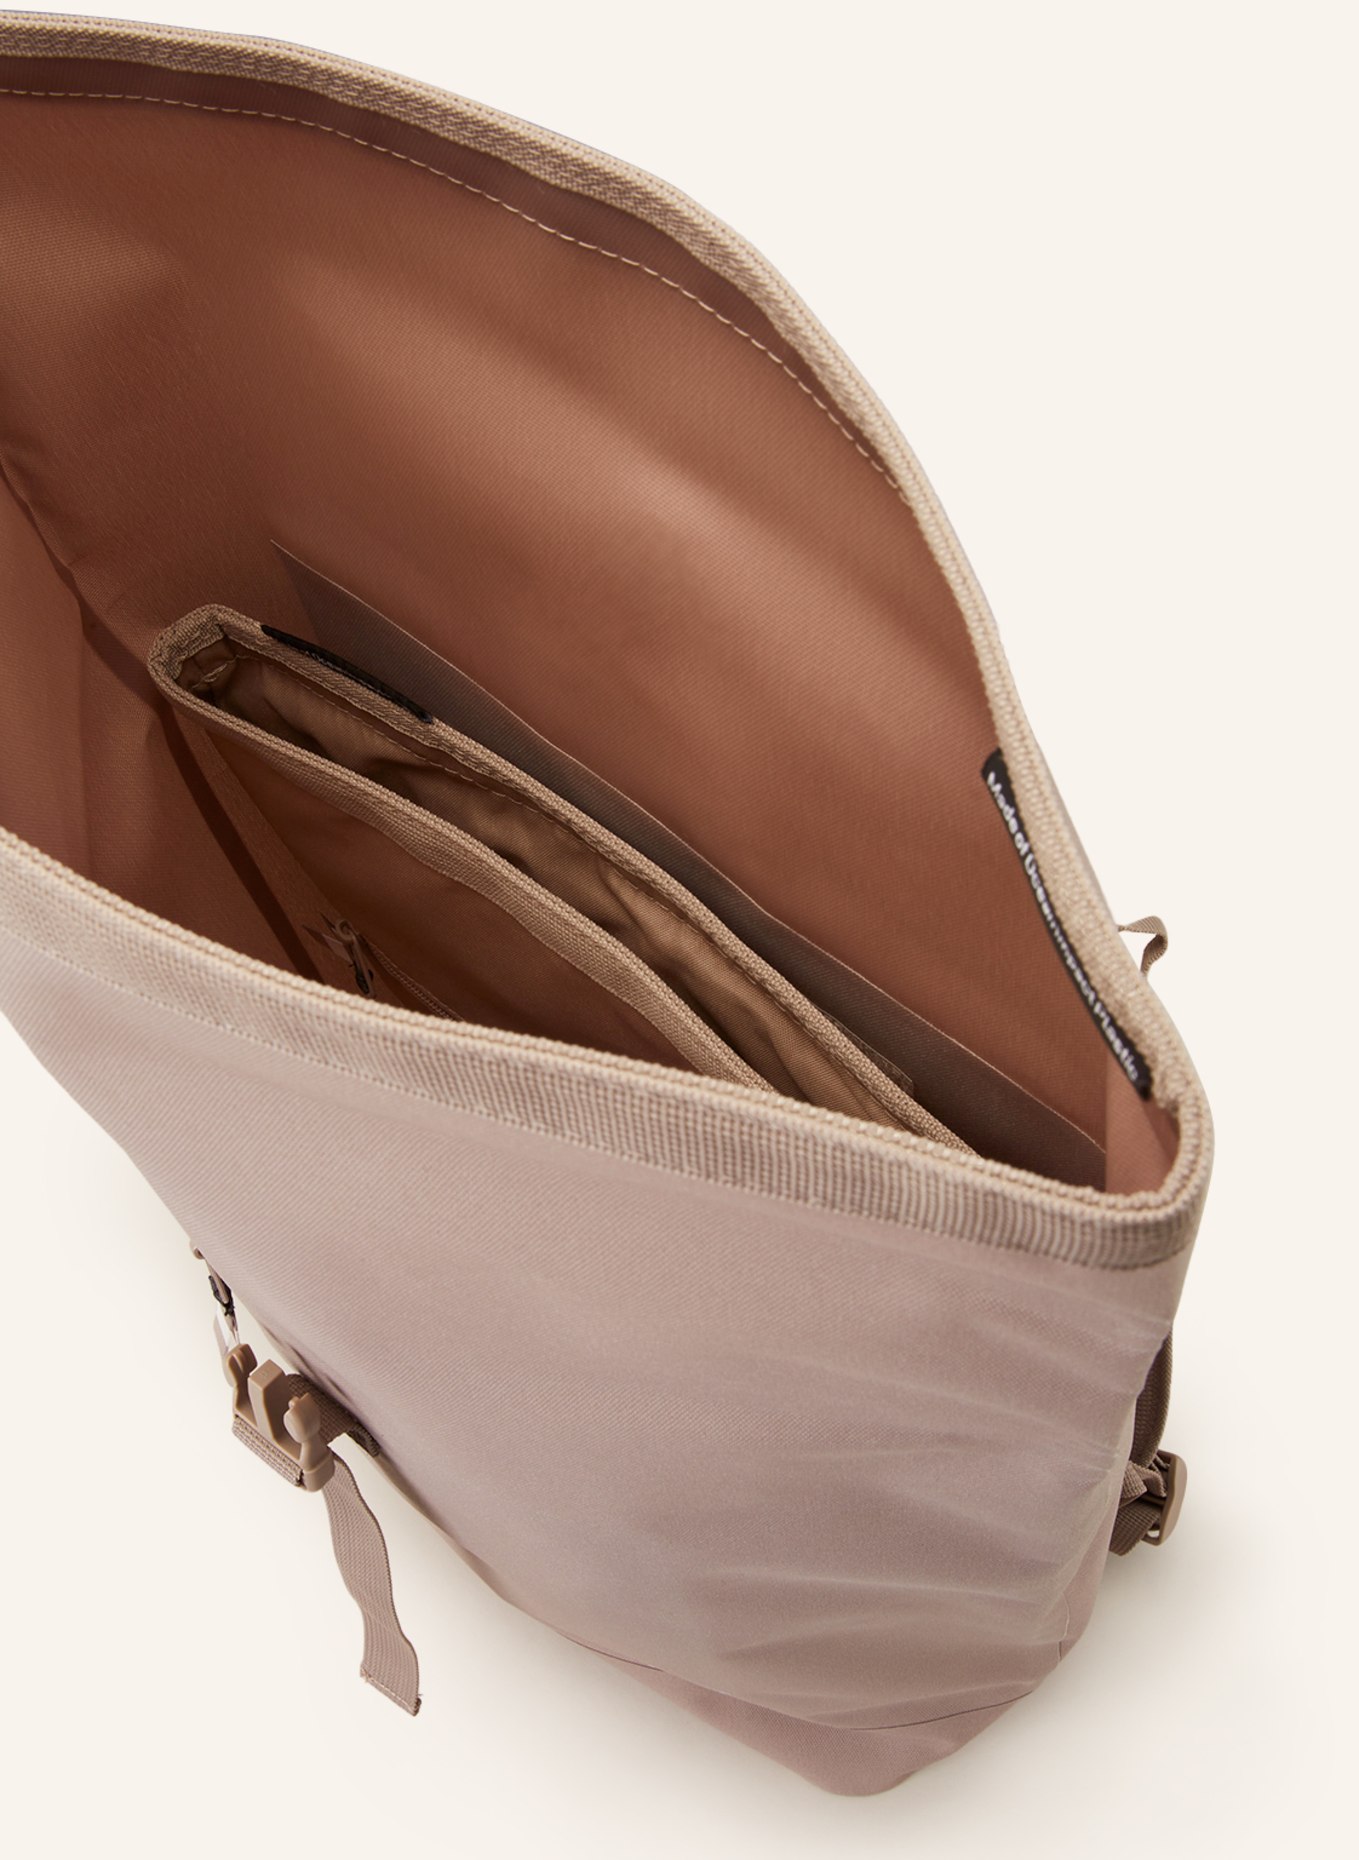 GOT BAG Backpack 26 l with laptop compartment, Color: BEIGE (Image 3)